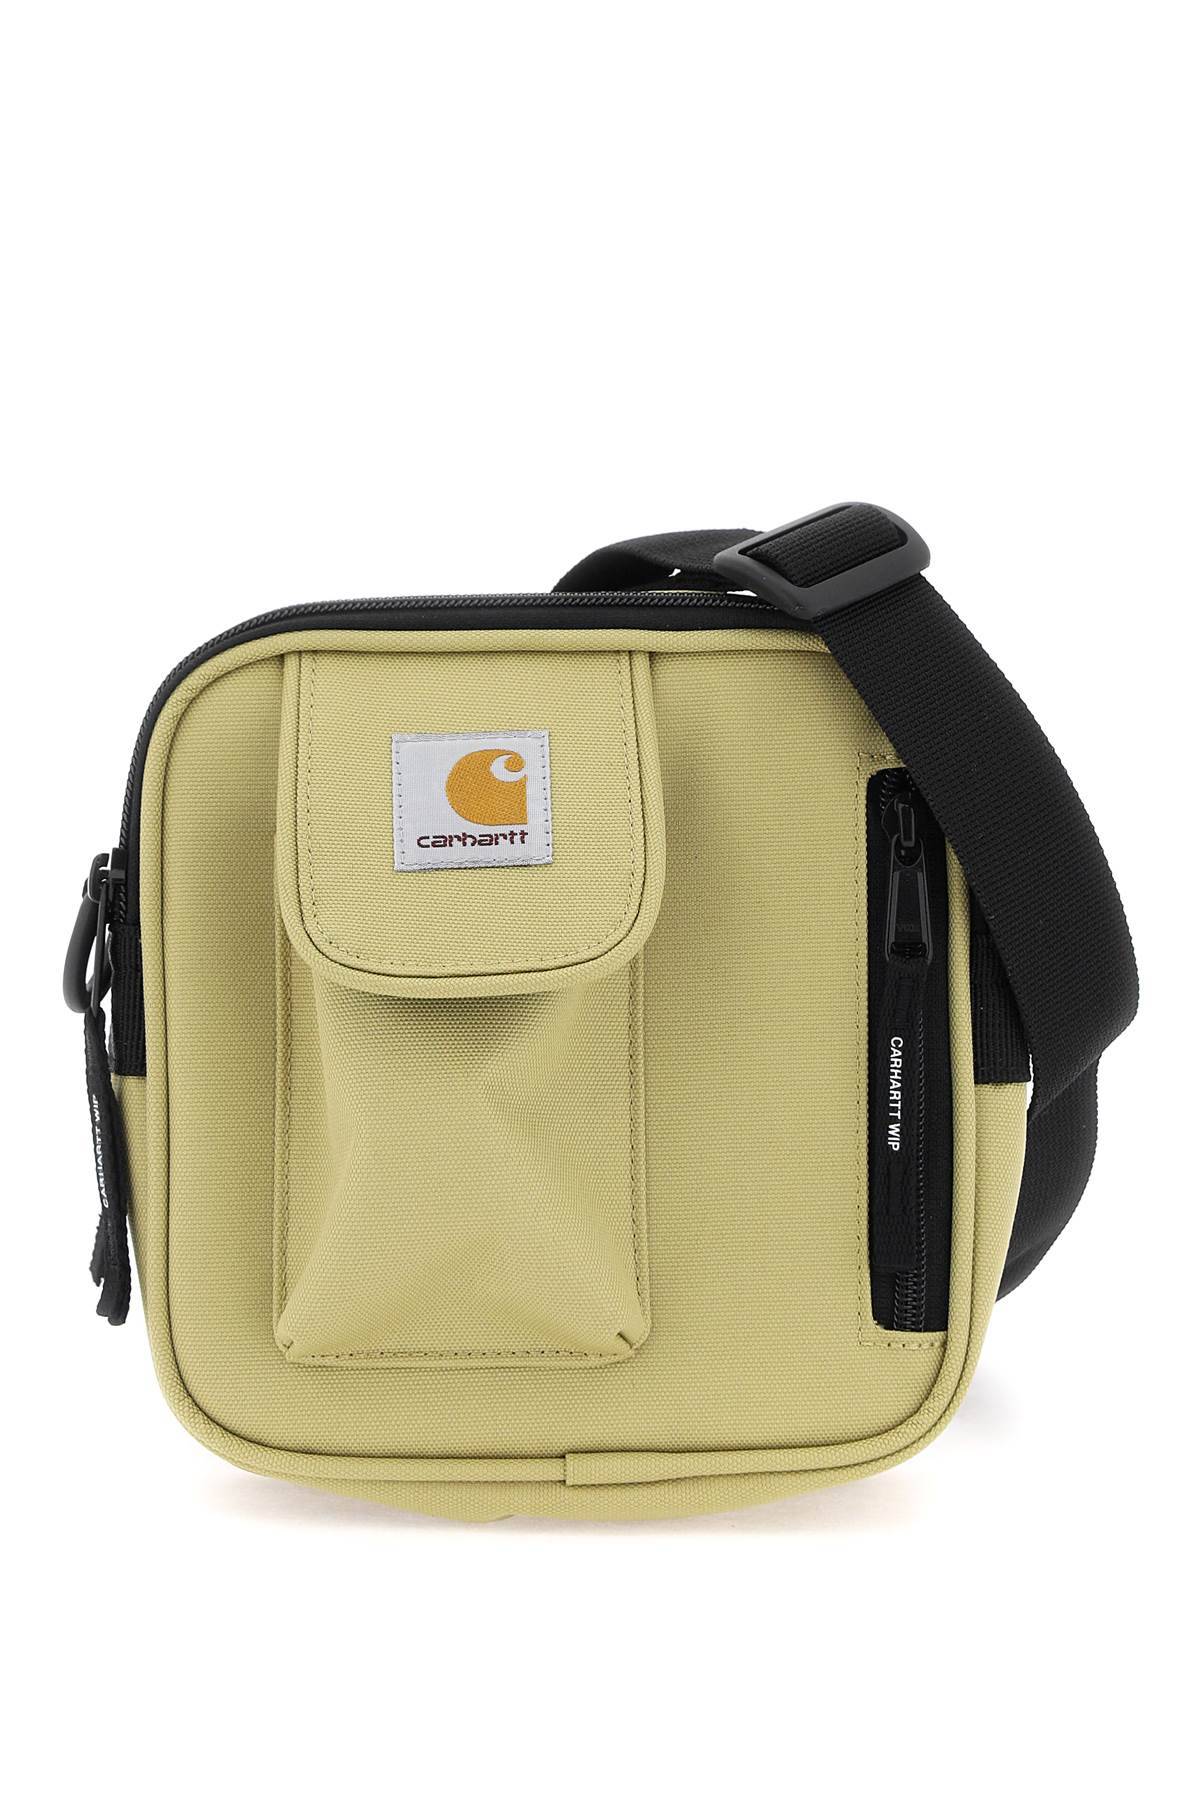 Carhartt WIP CARHARTT WIP essentials shoulder bag with strap